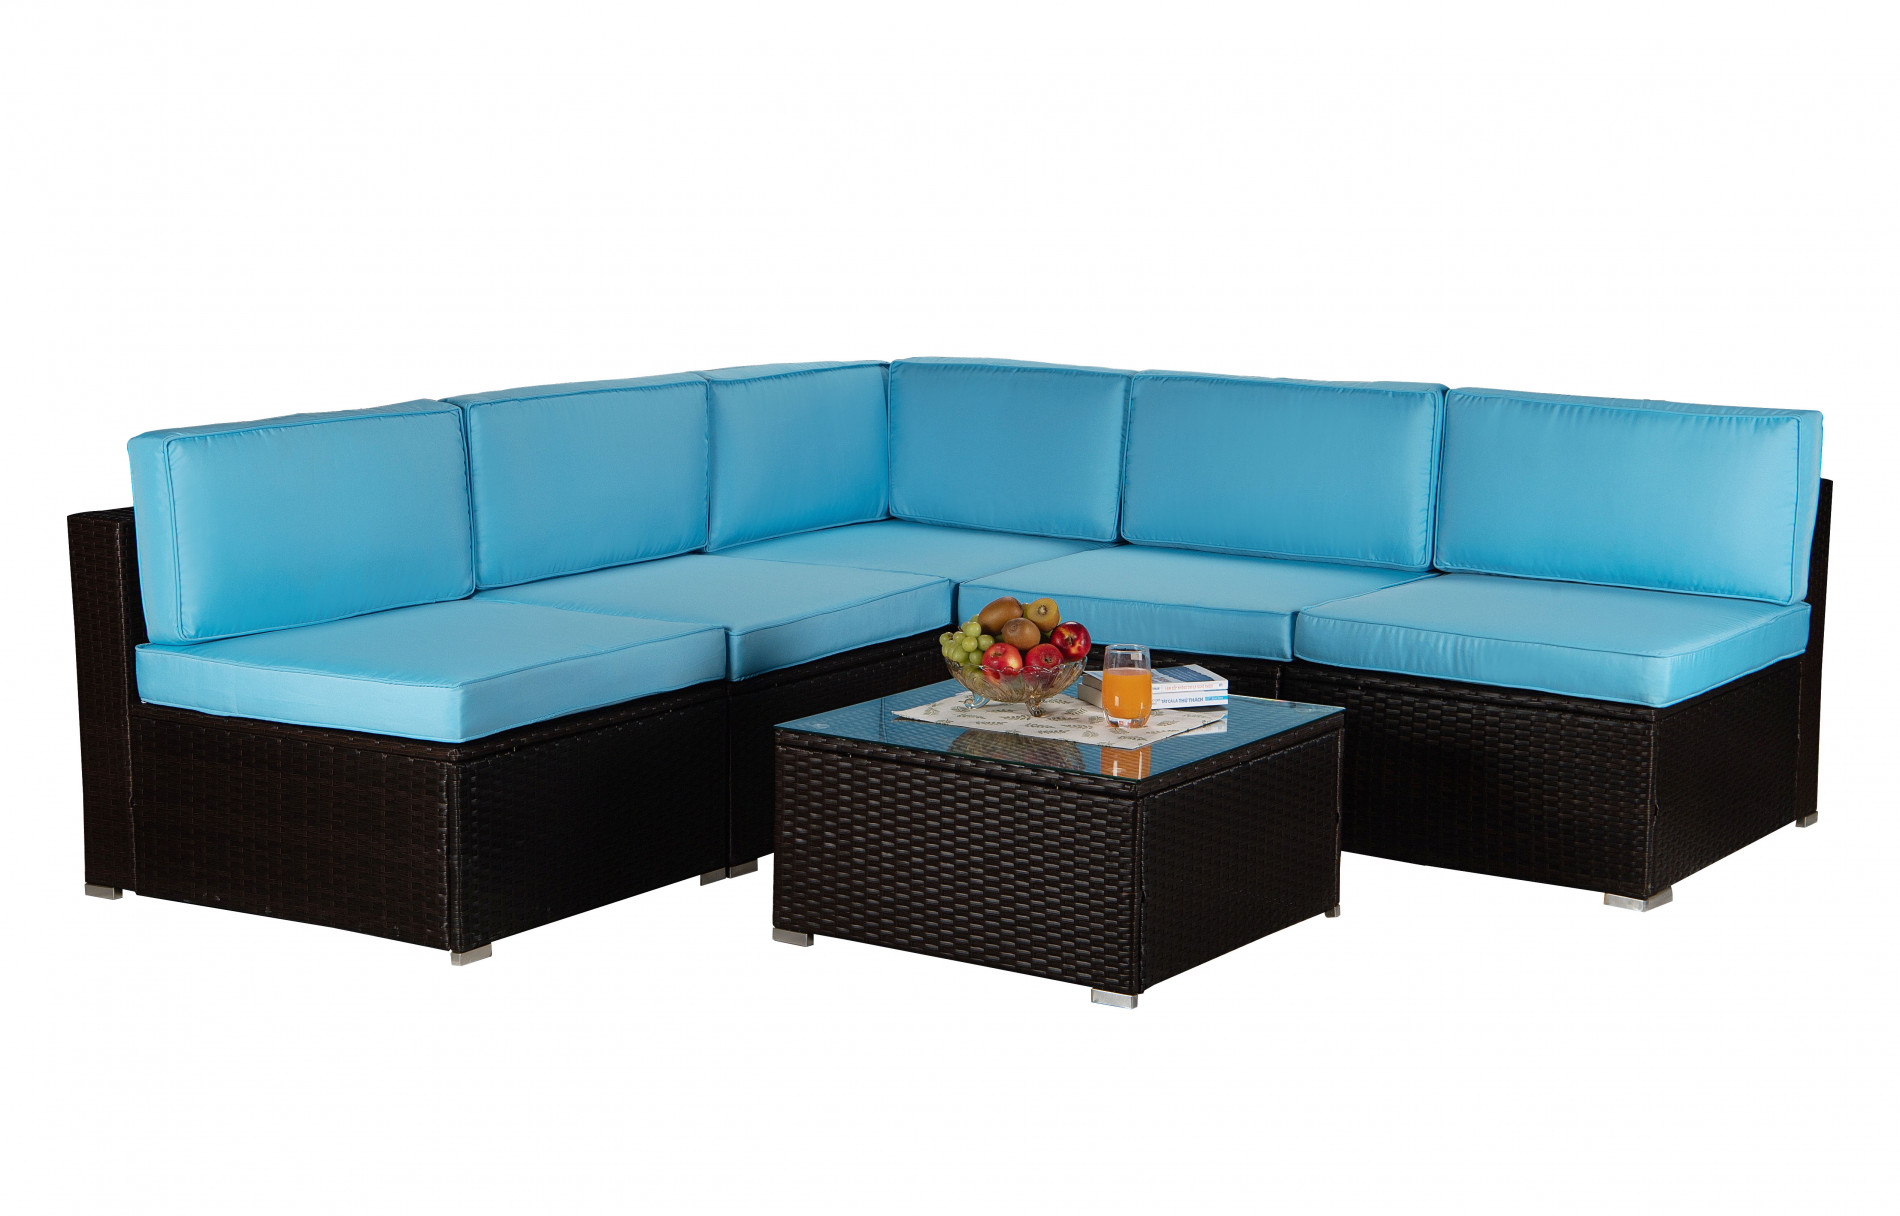 Beefurni Outdoor Garden Patio Furniture 6-Piece Brown PE Rattan Wicker Sectional Blue Cushioned Sofa Sets